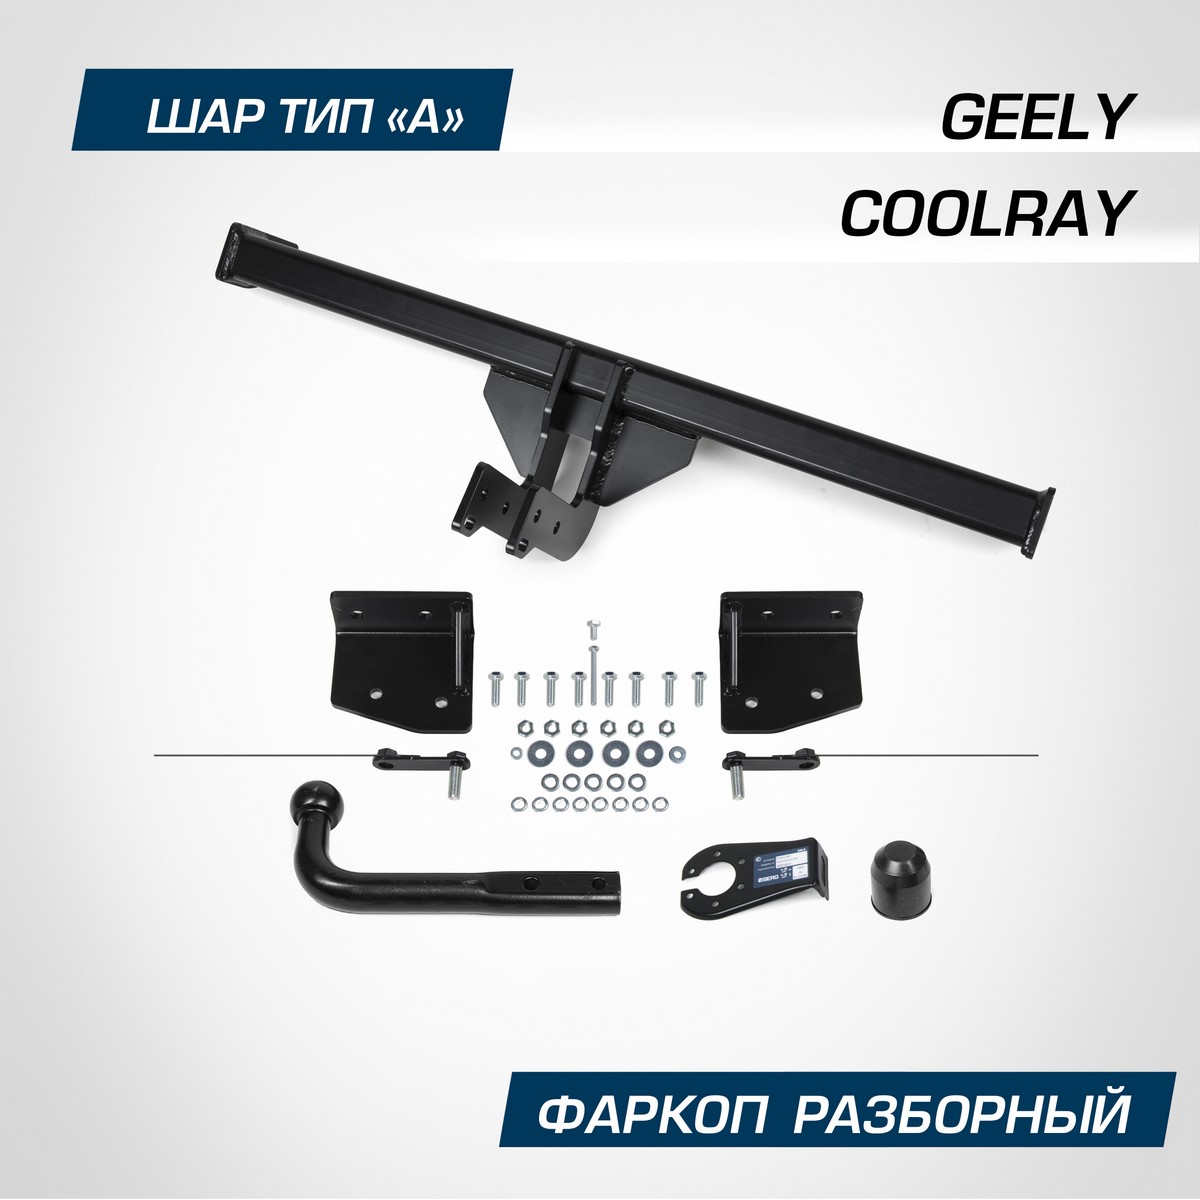 Фаркоп Berg для Geely Coolray SX11 2020-н.в., шар А, 1500/75 кг, F.1912.001